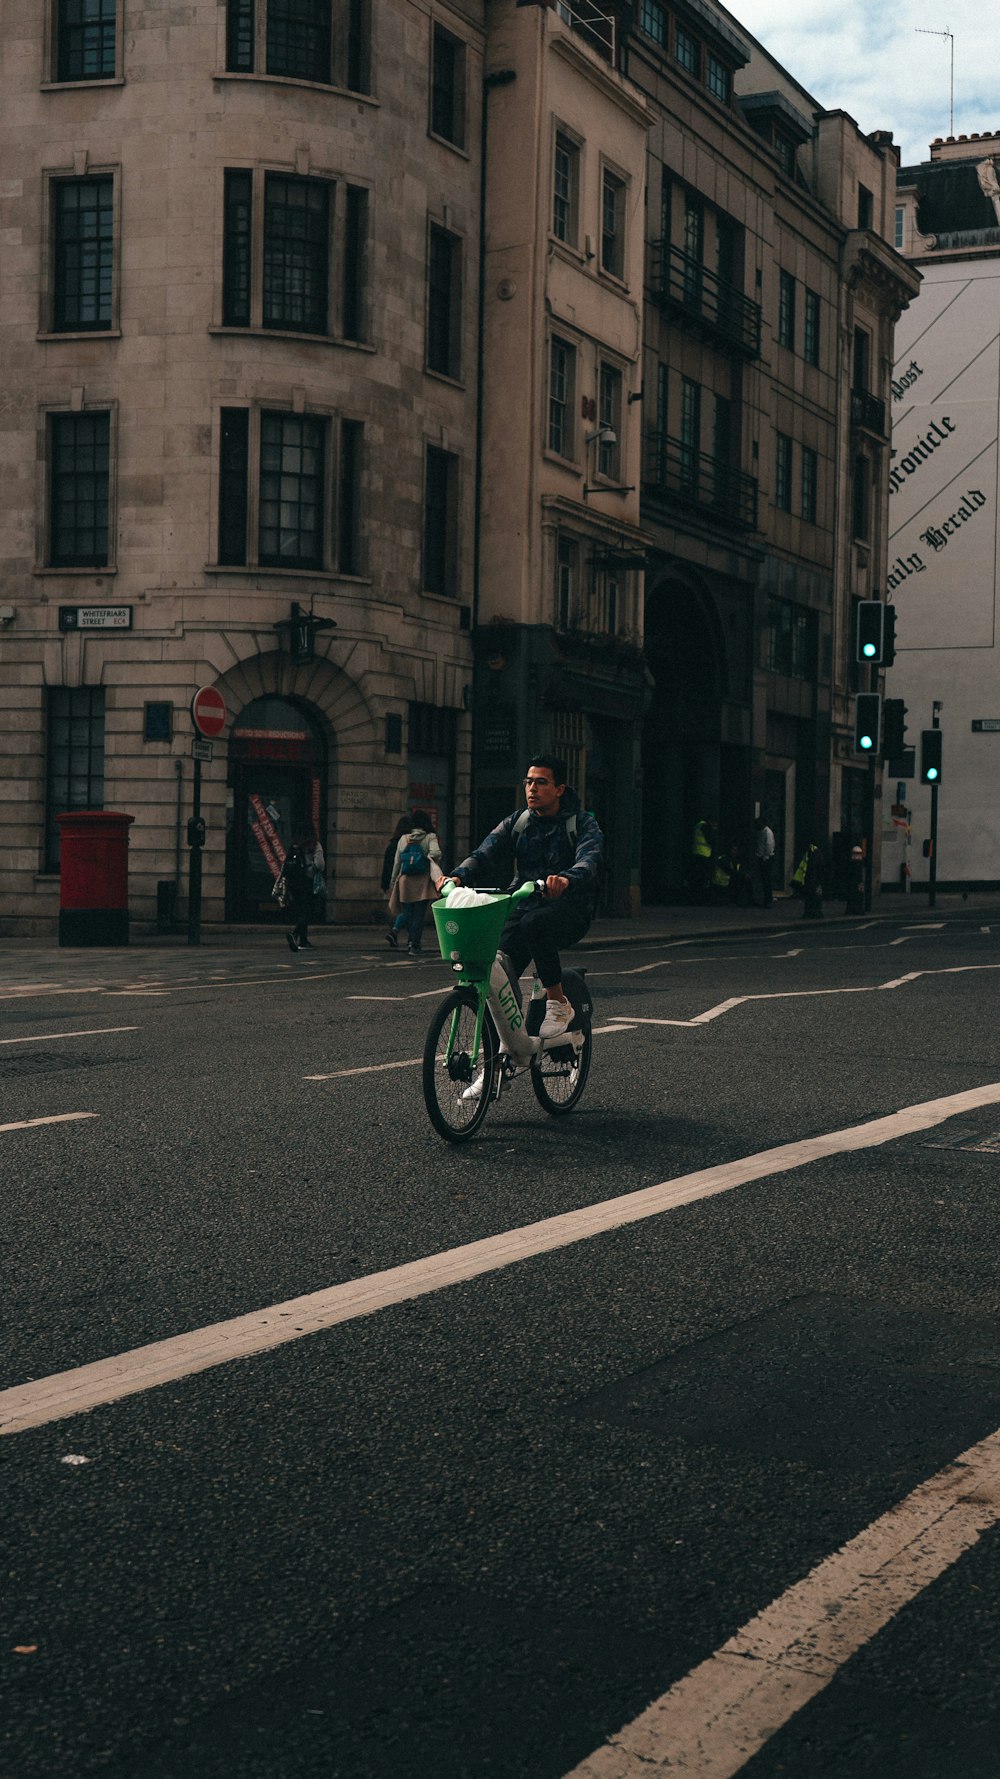 a man riding a small green bike down a street